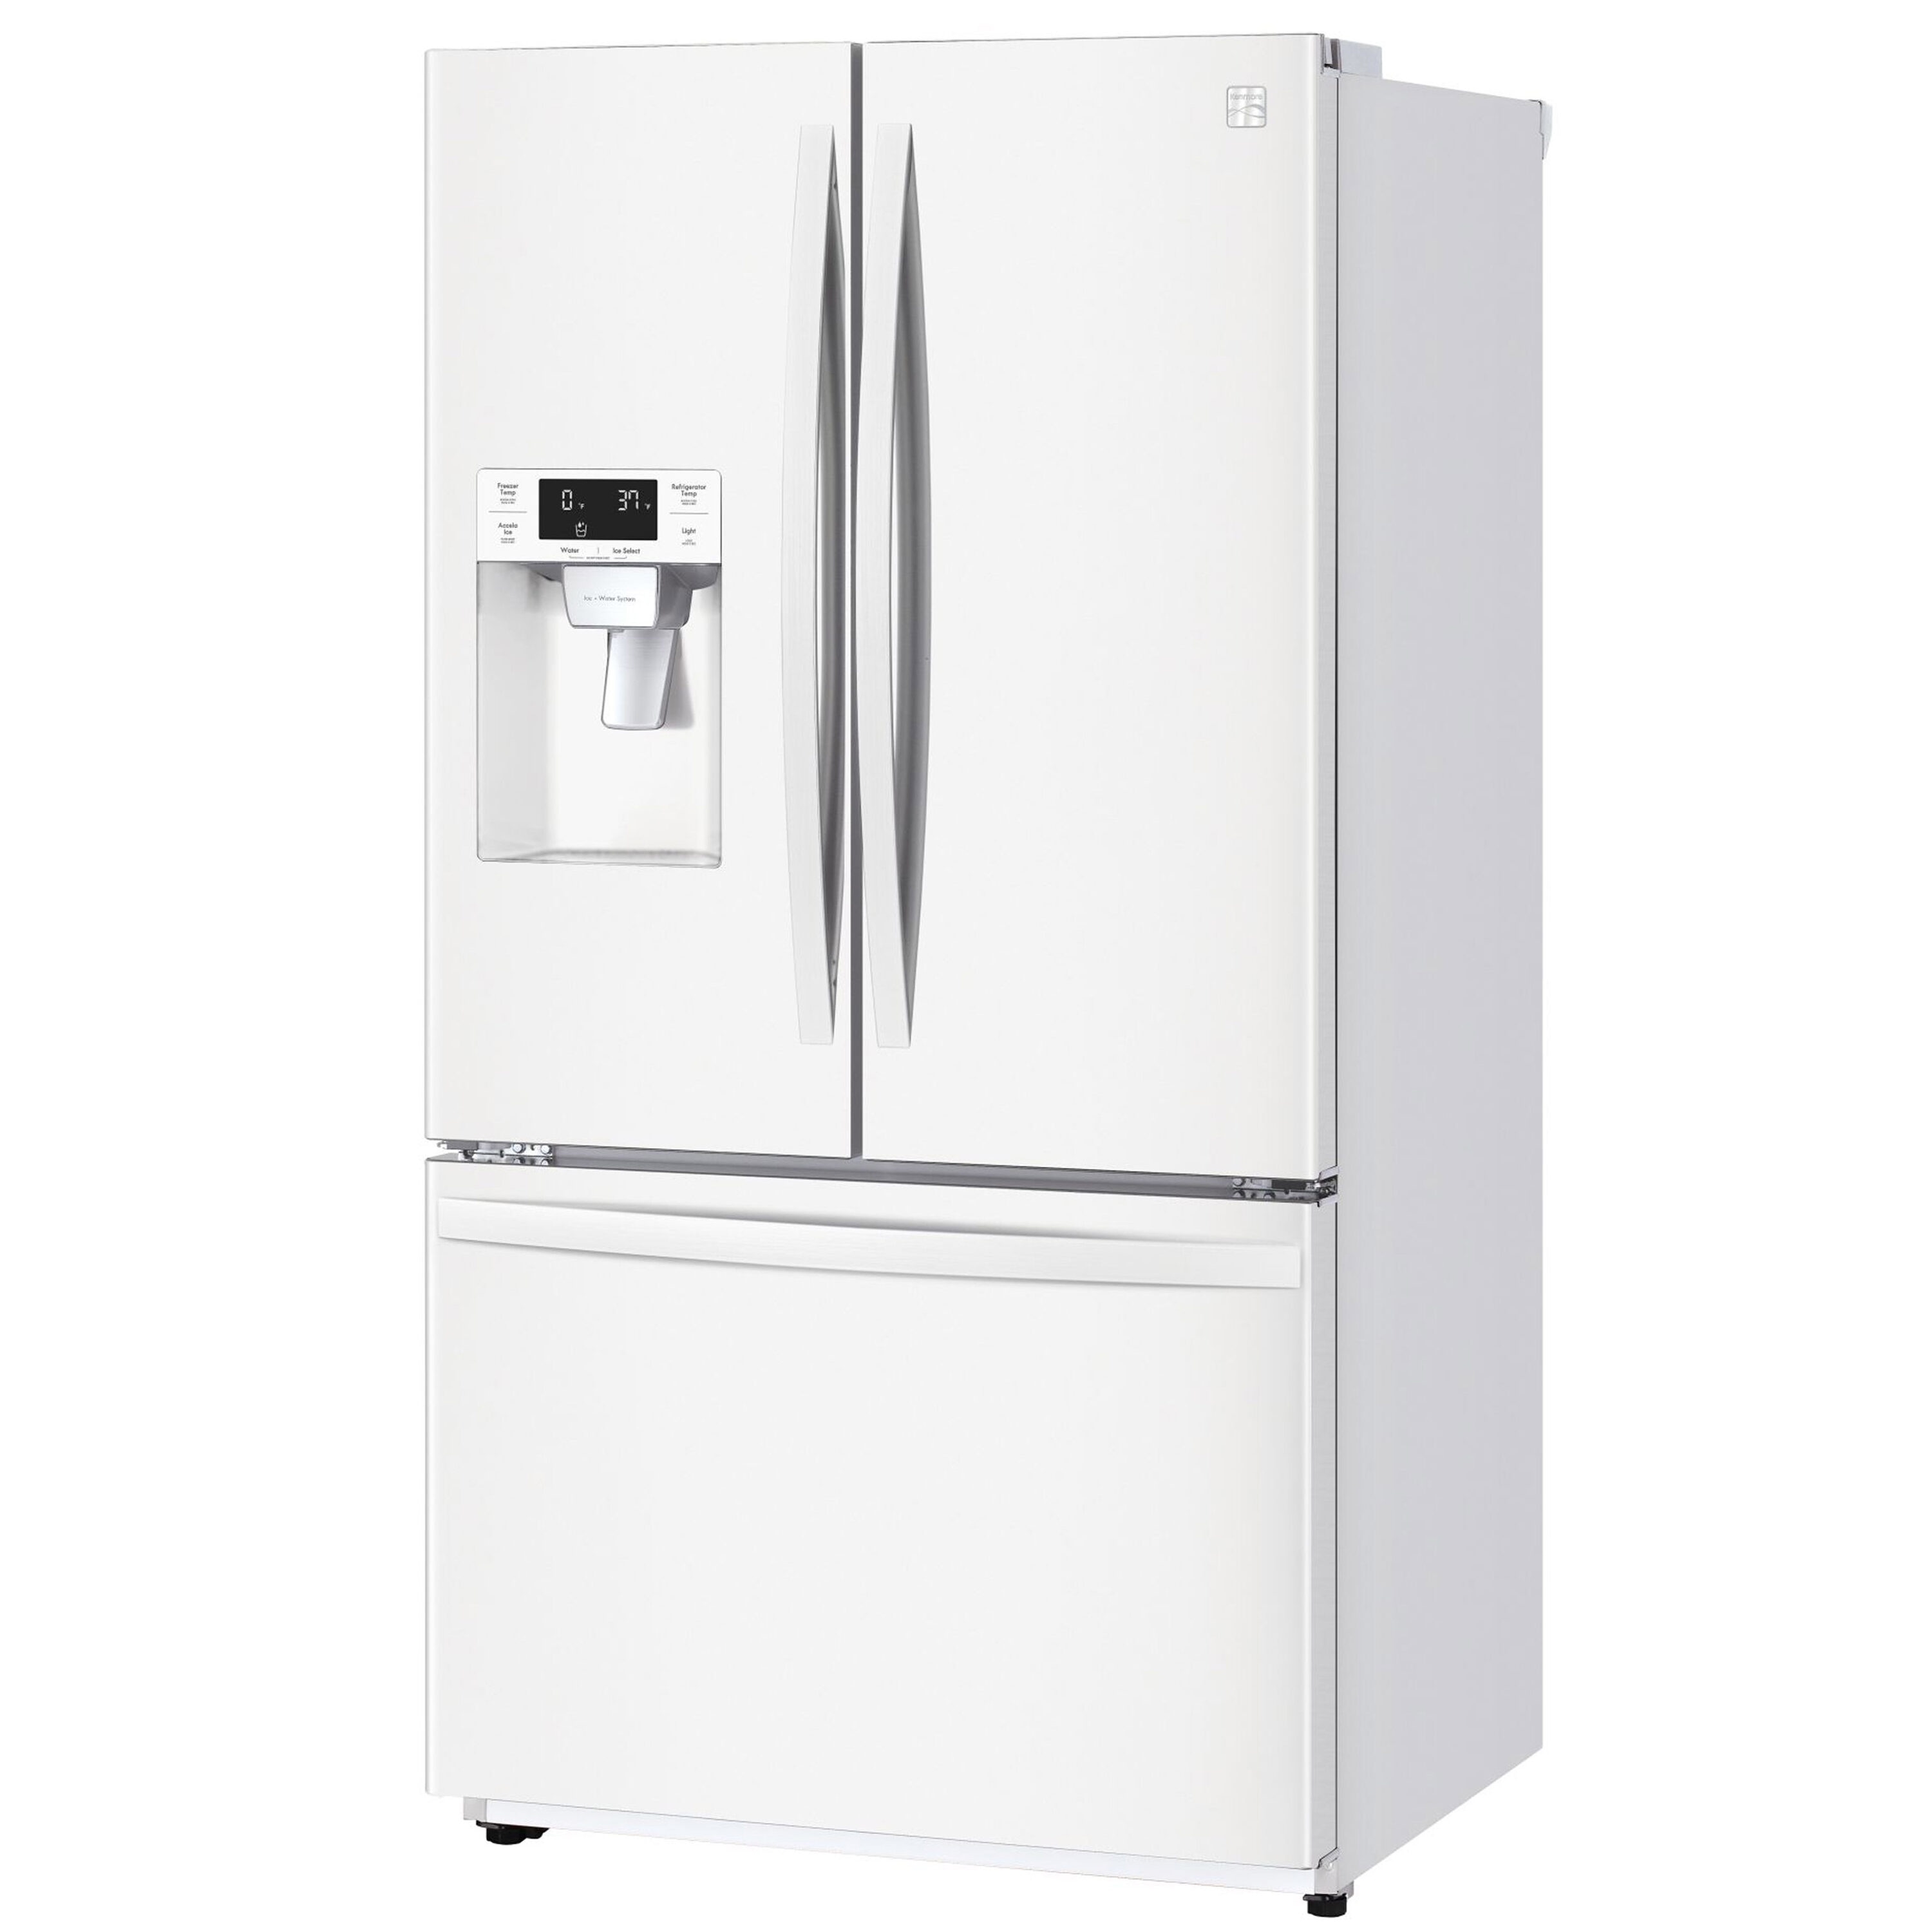 G223 Kenmore French Door White Refrigerator